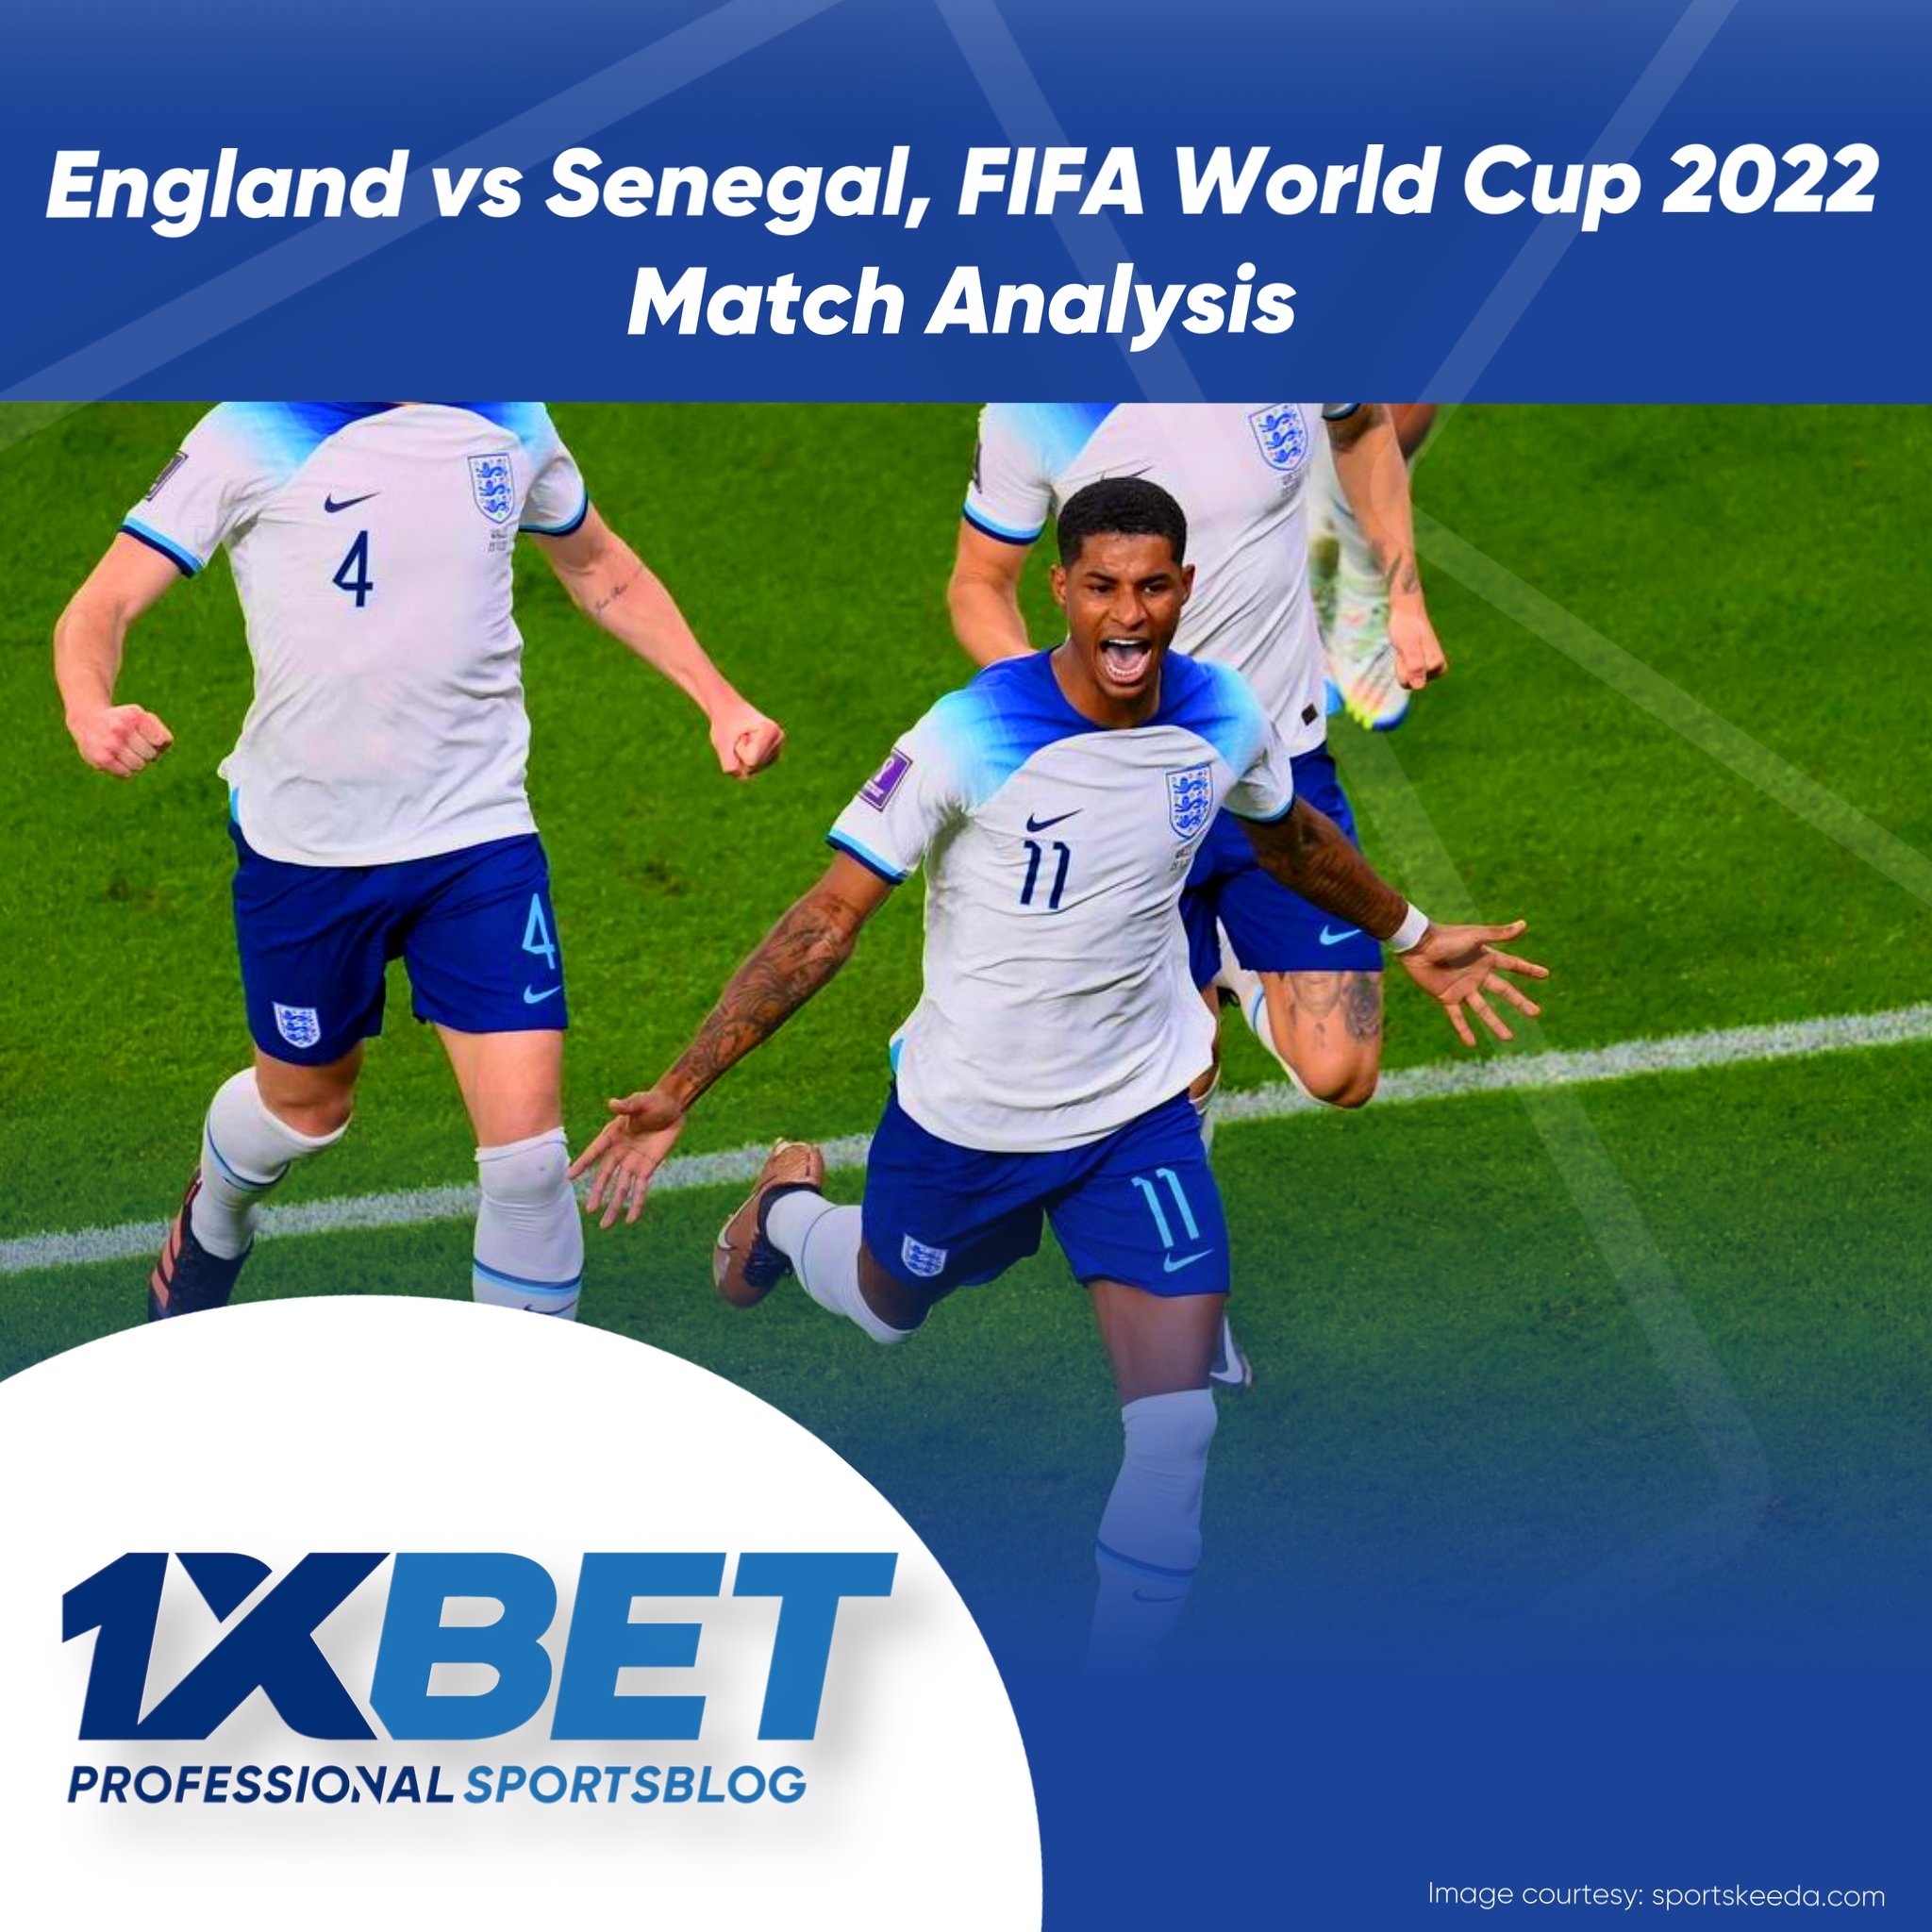 England vs Senegal, FIFA World Cup 2022 Match Analysis